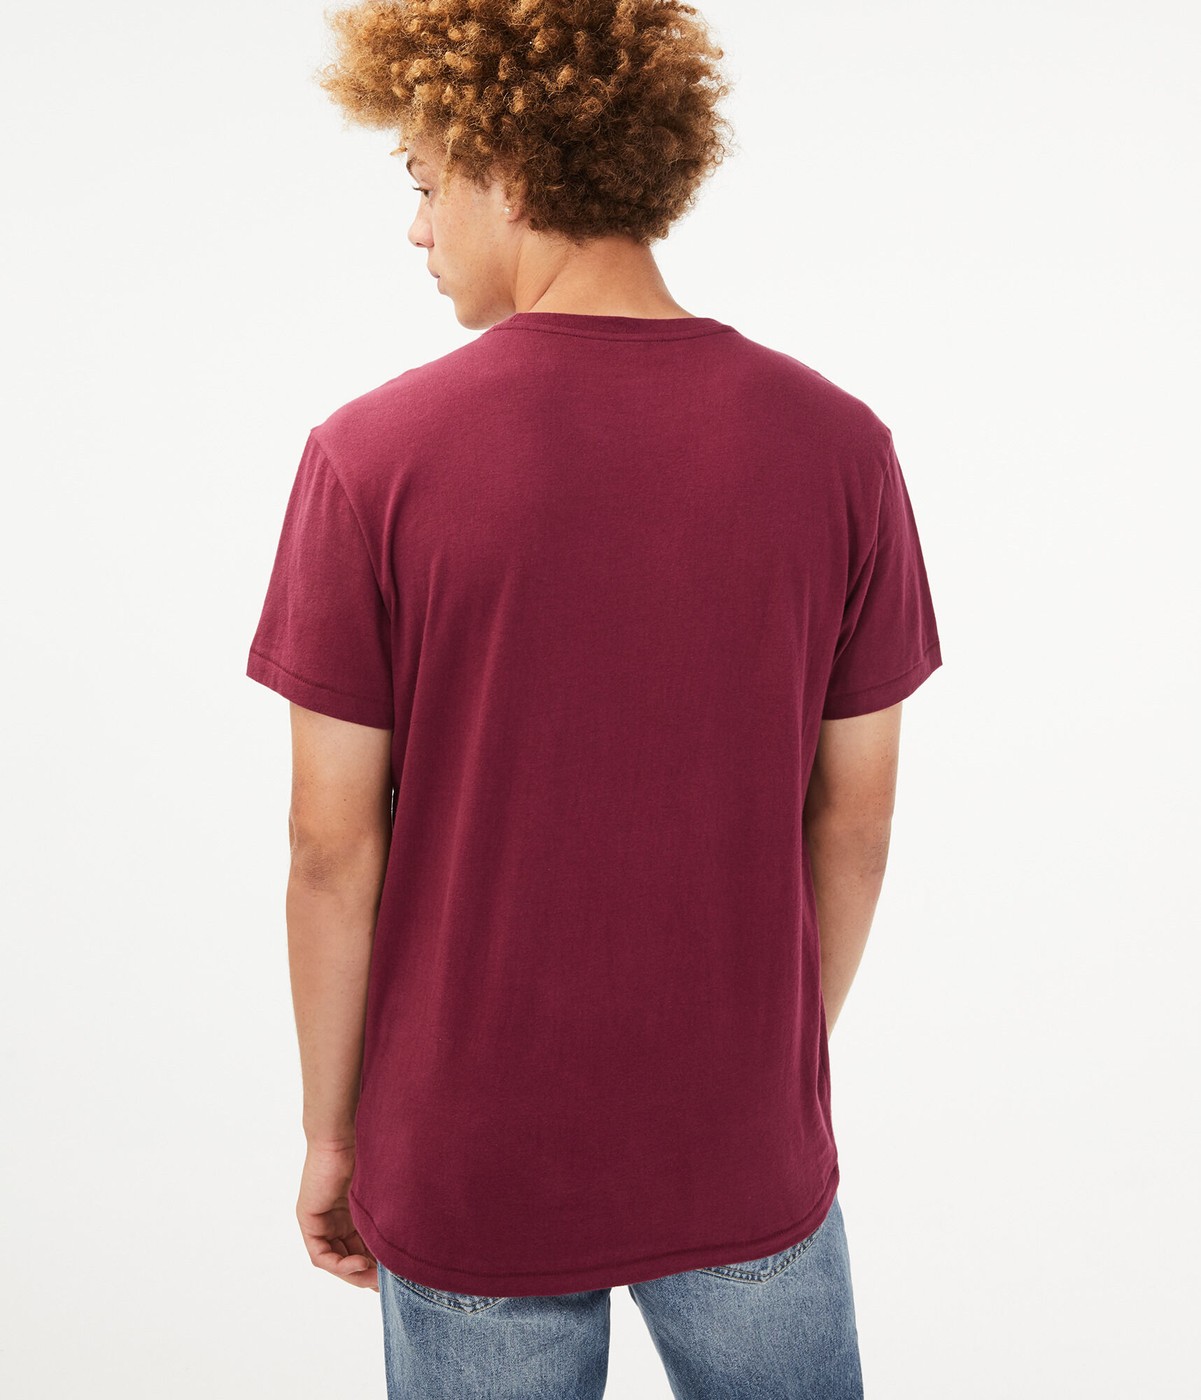 Бордовая футболка - мужская футболка Aeropostale, M, M